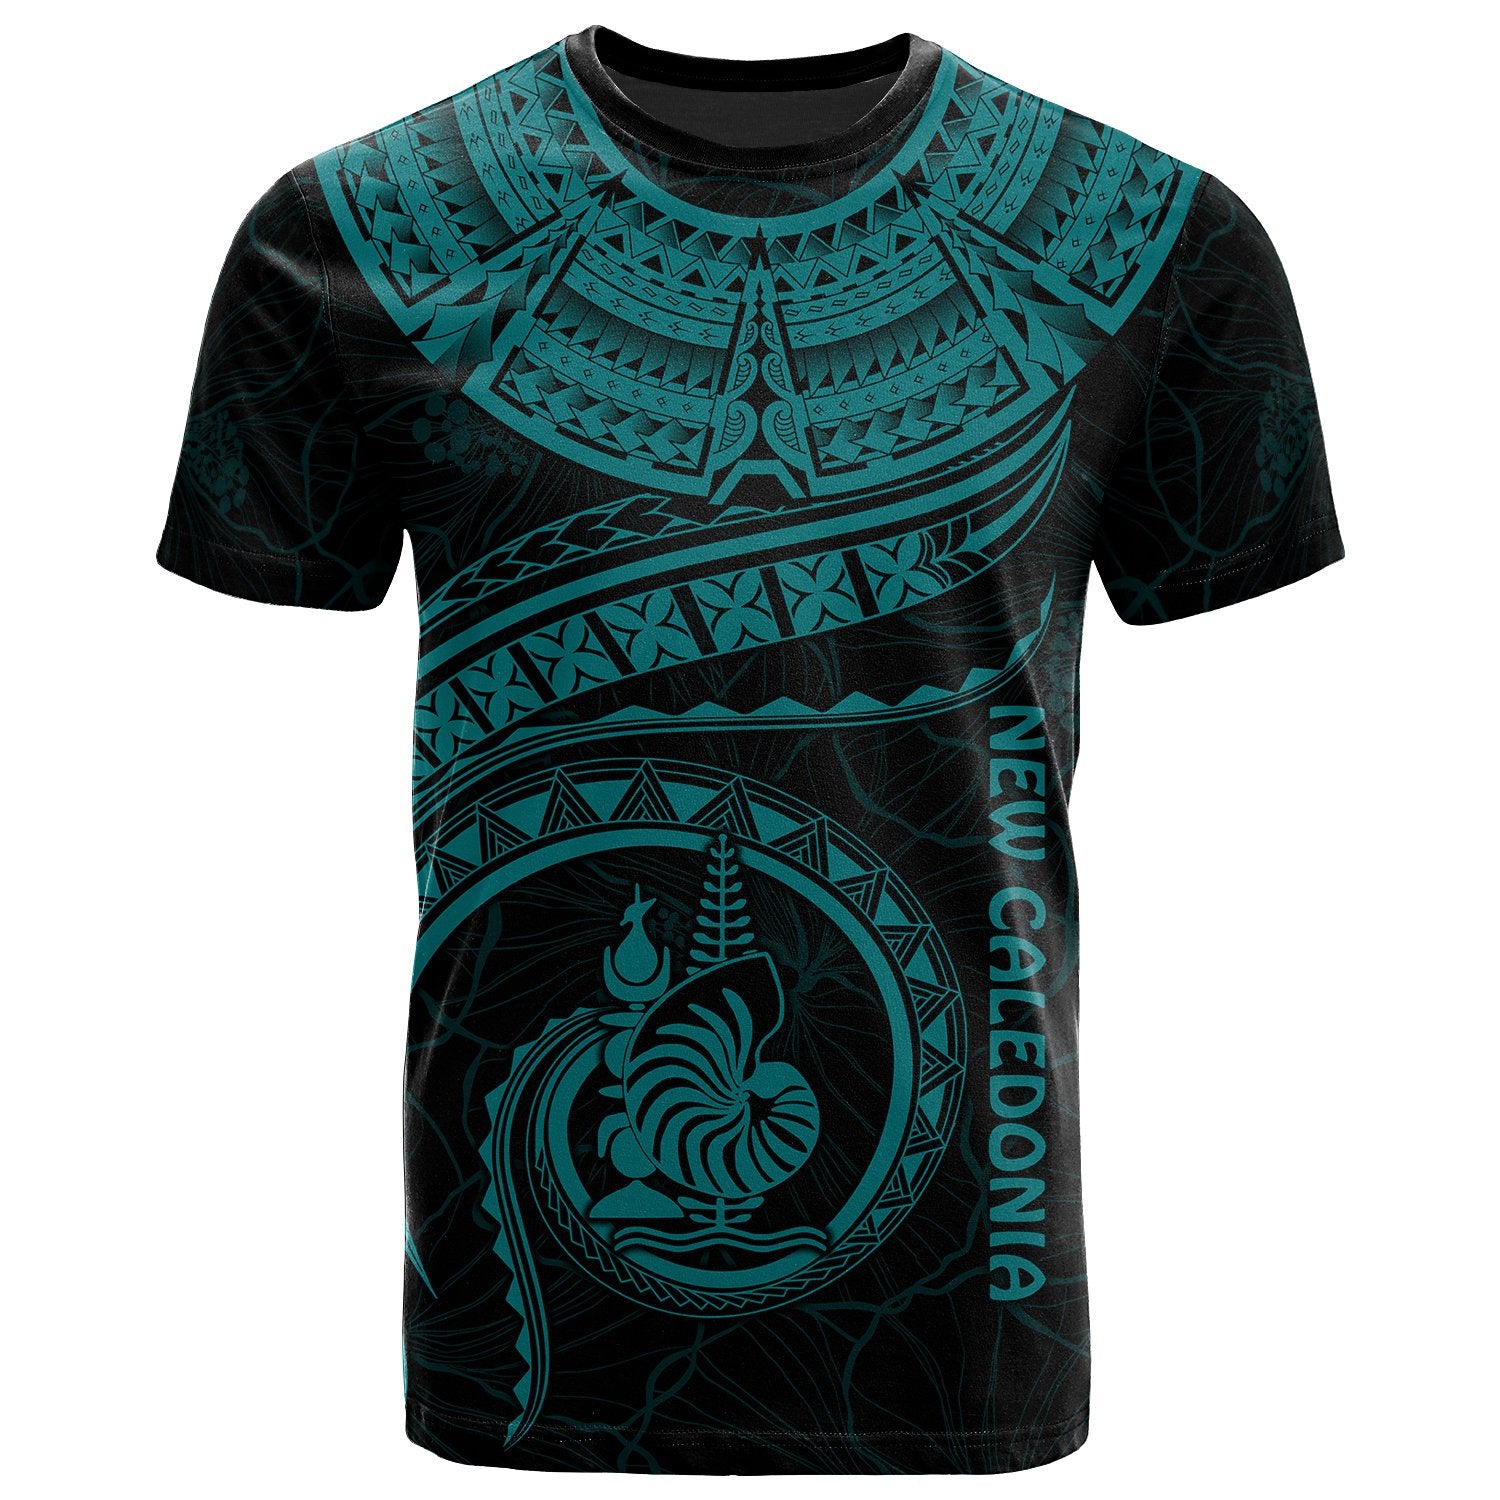 New Caledonia Polynesian T Shirt New Caledonia Waves (Turquoise) Unisex Art - Polynesian Pride